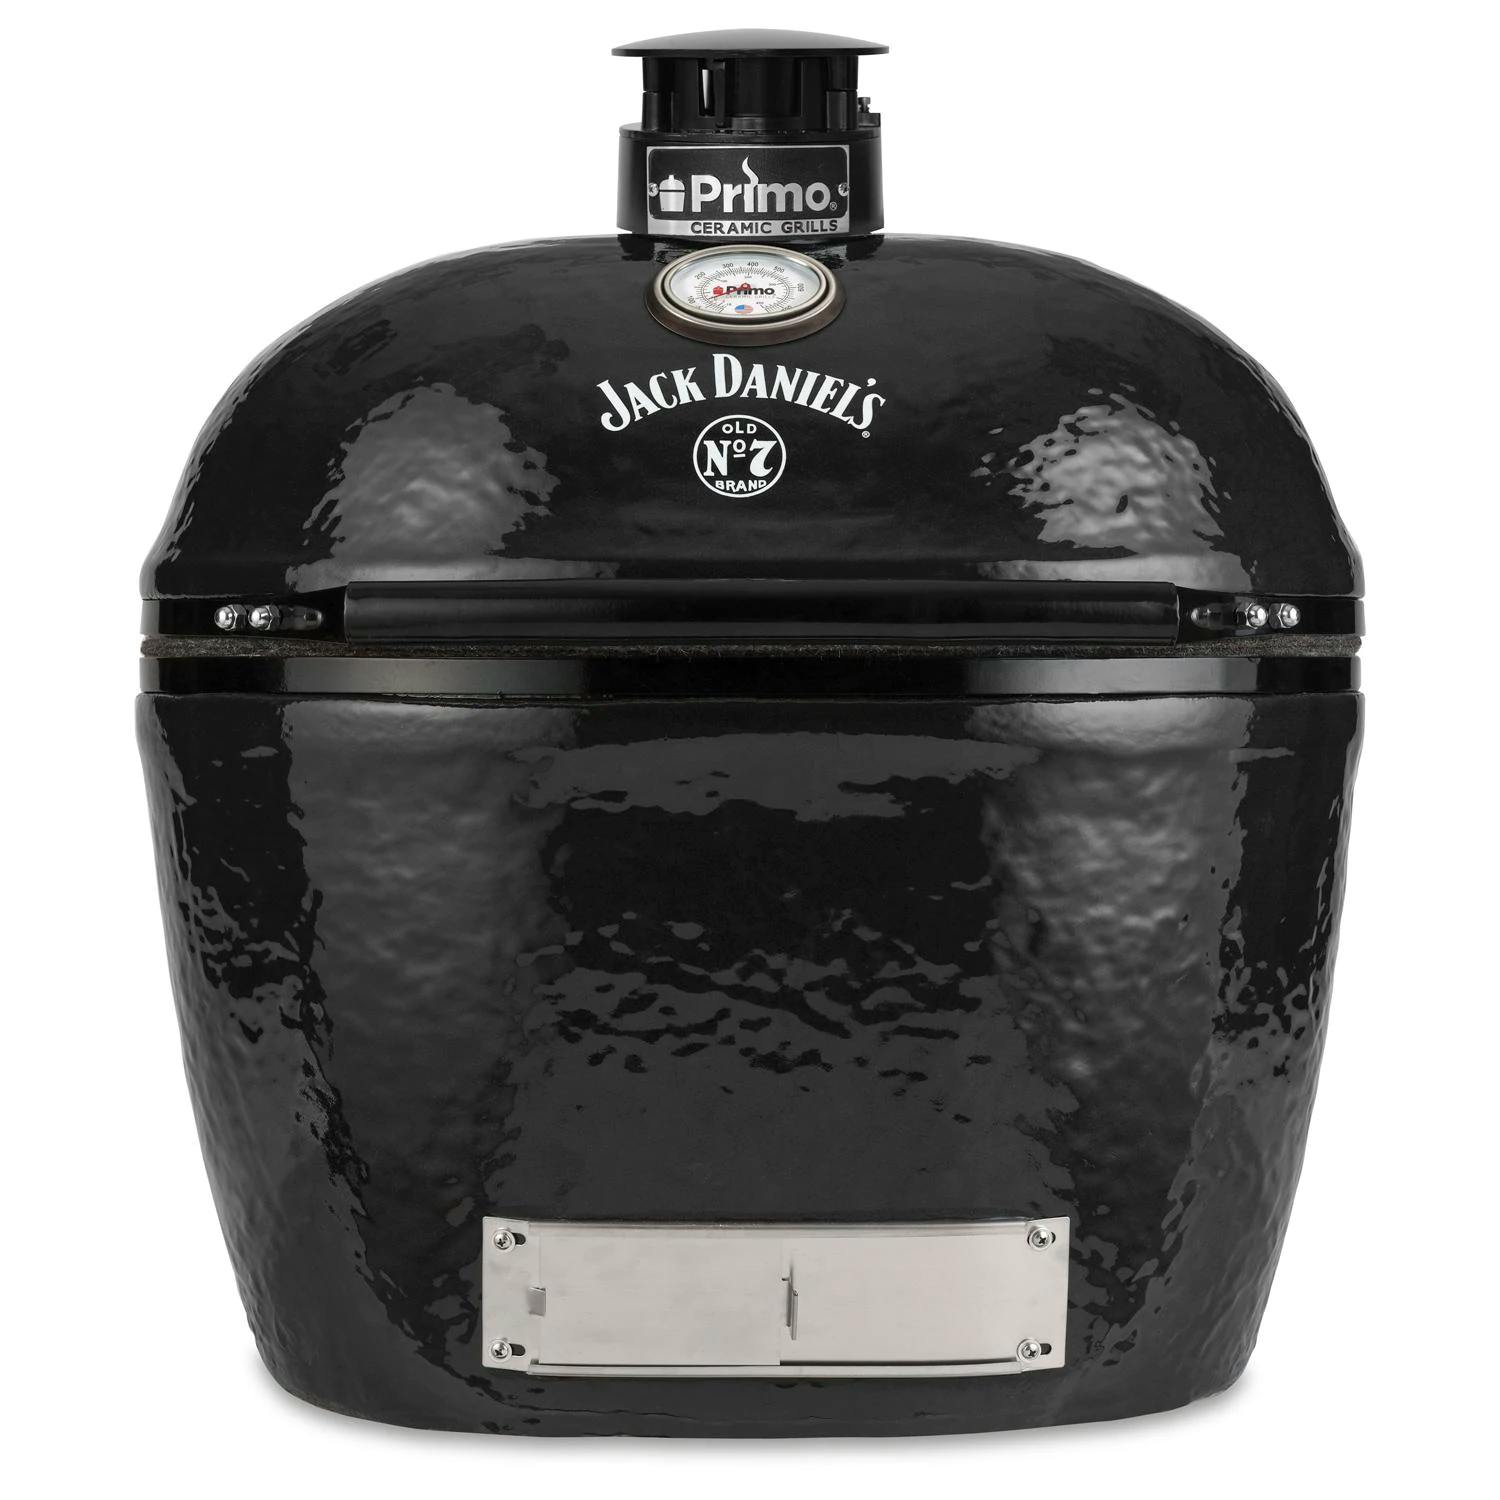 Primo Jack Daniels Edition Oval XL 400 Ceramic Kamado Grill